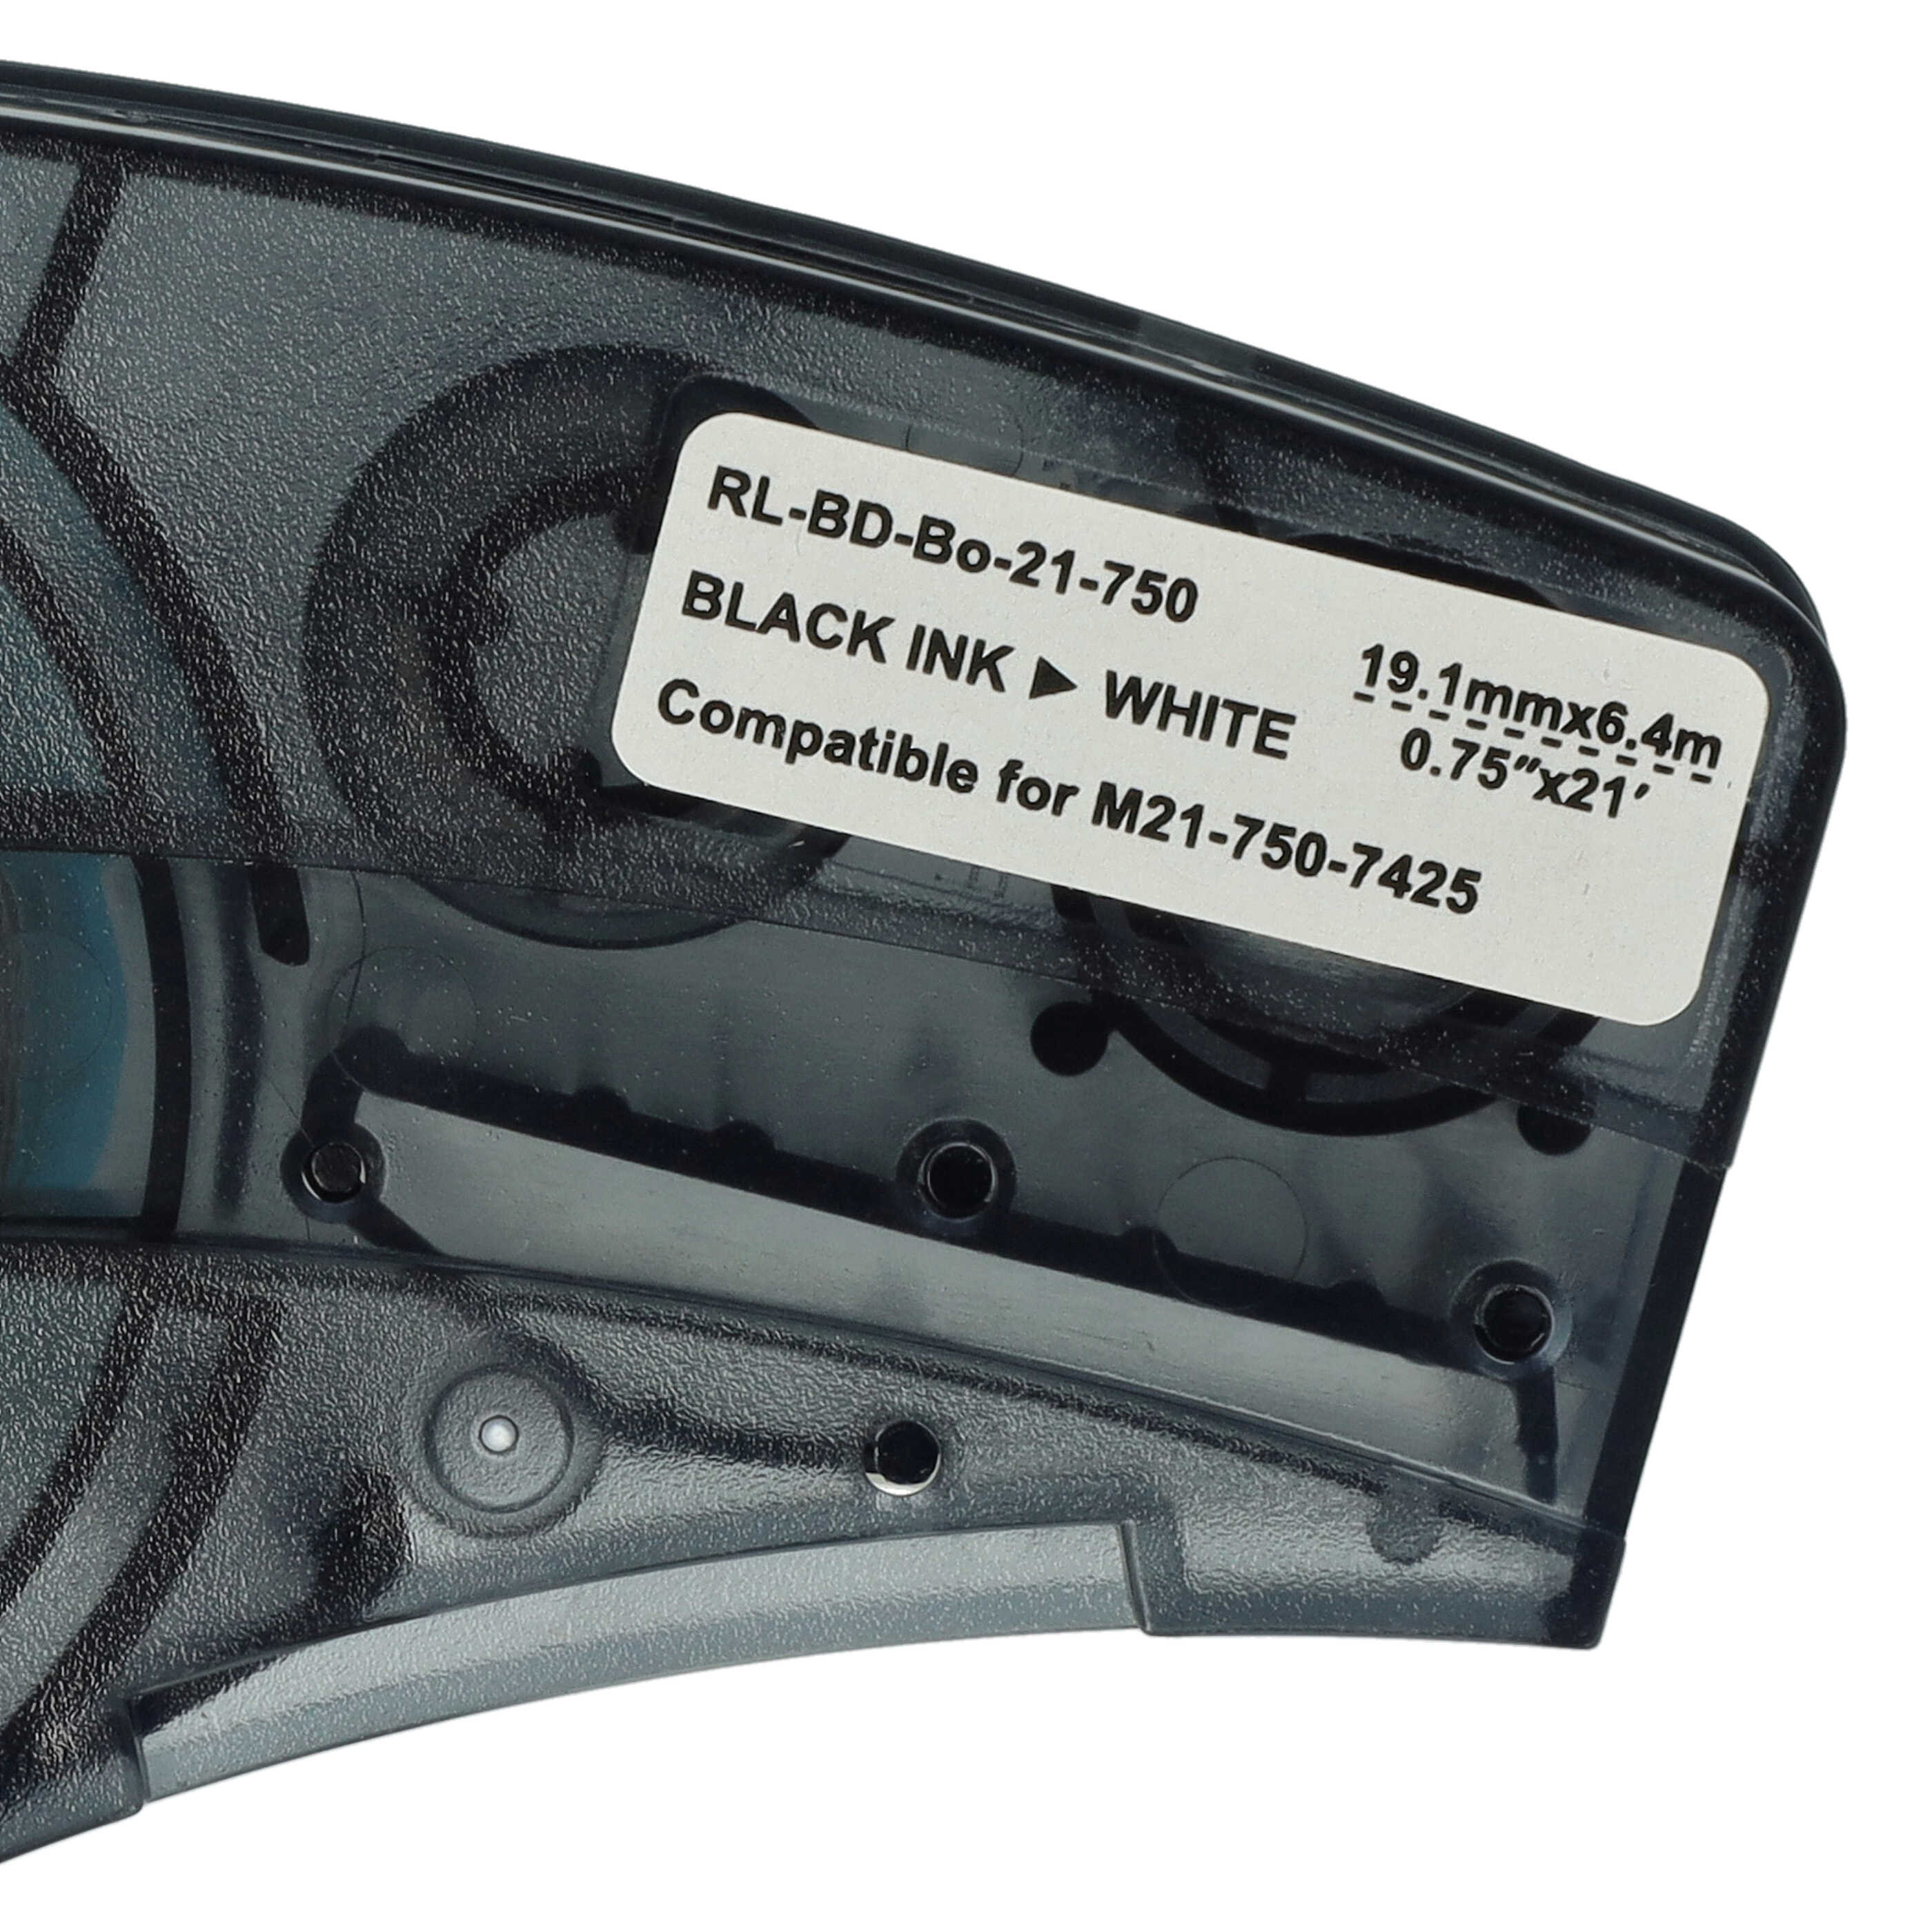 Casete cinta escritura reemplaza Brady M21-750-7425 Negro su Blanco